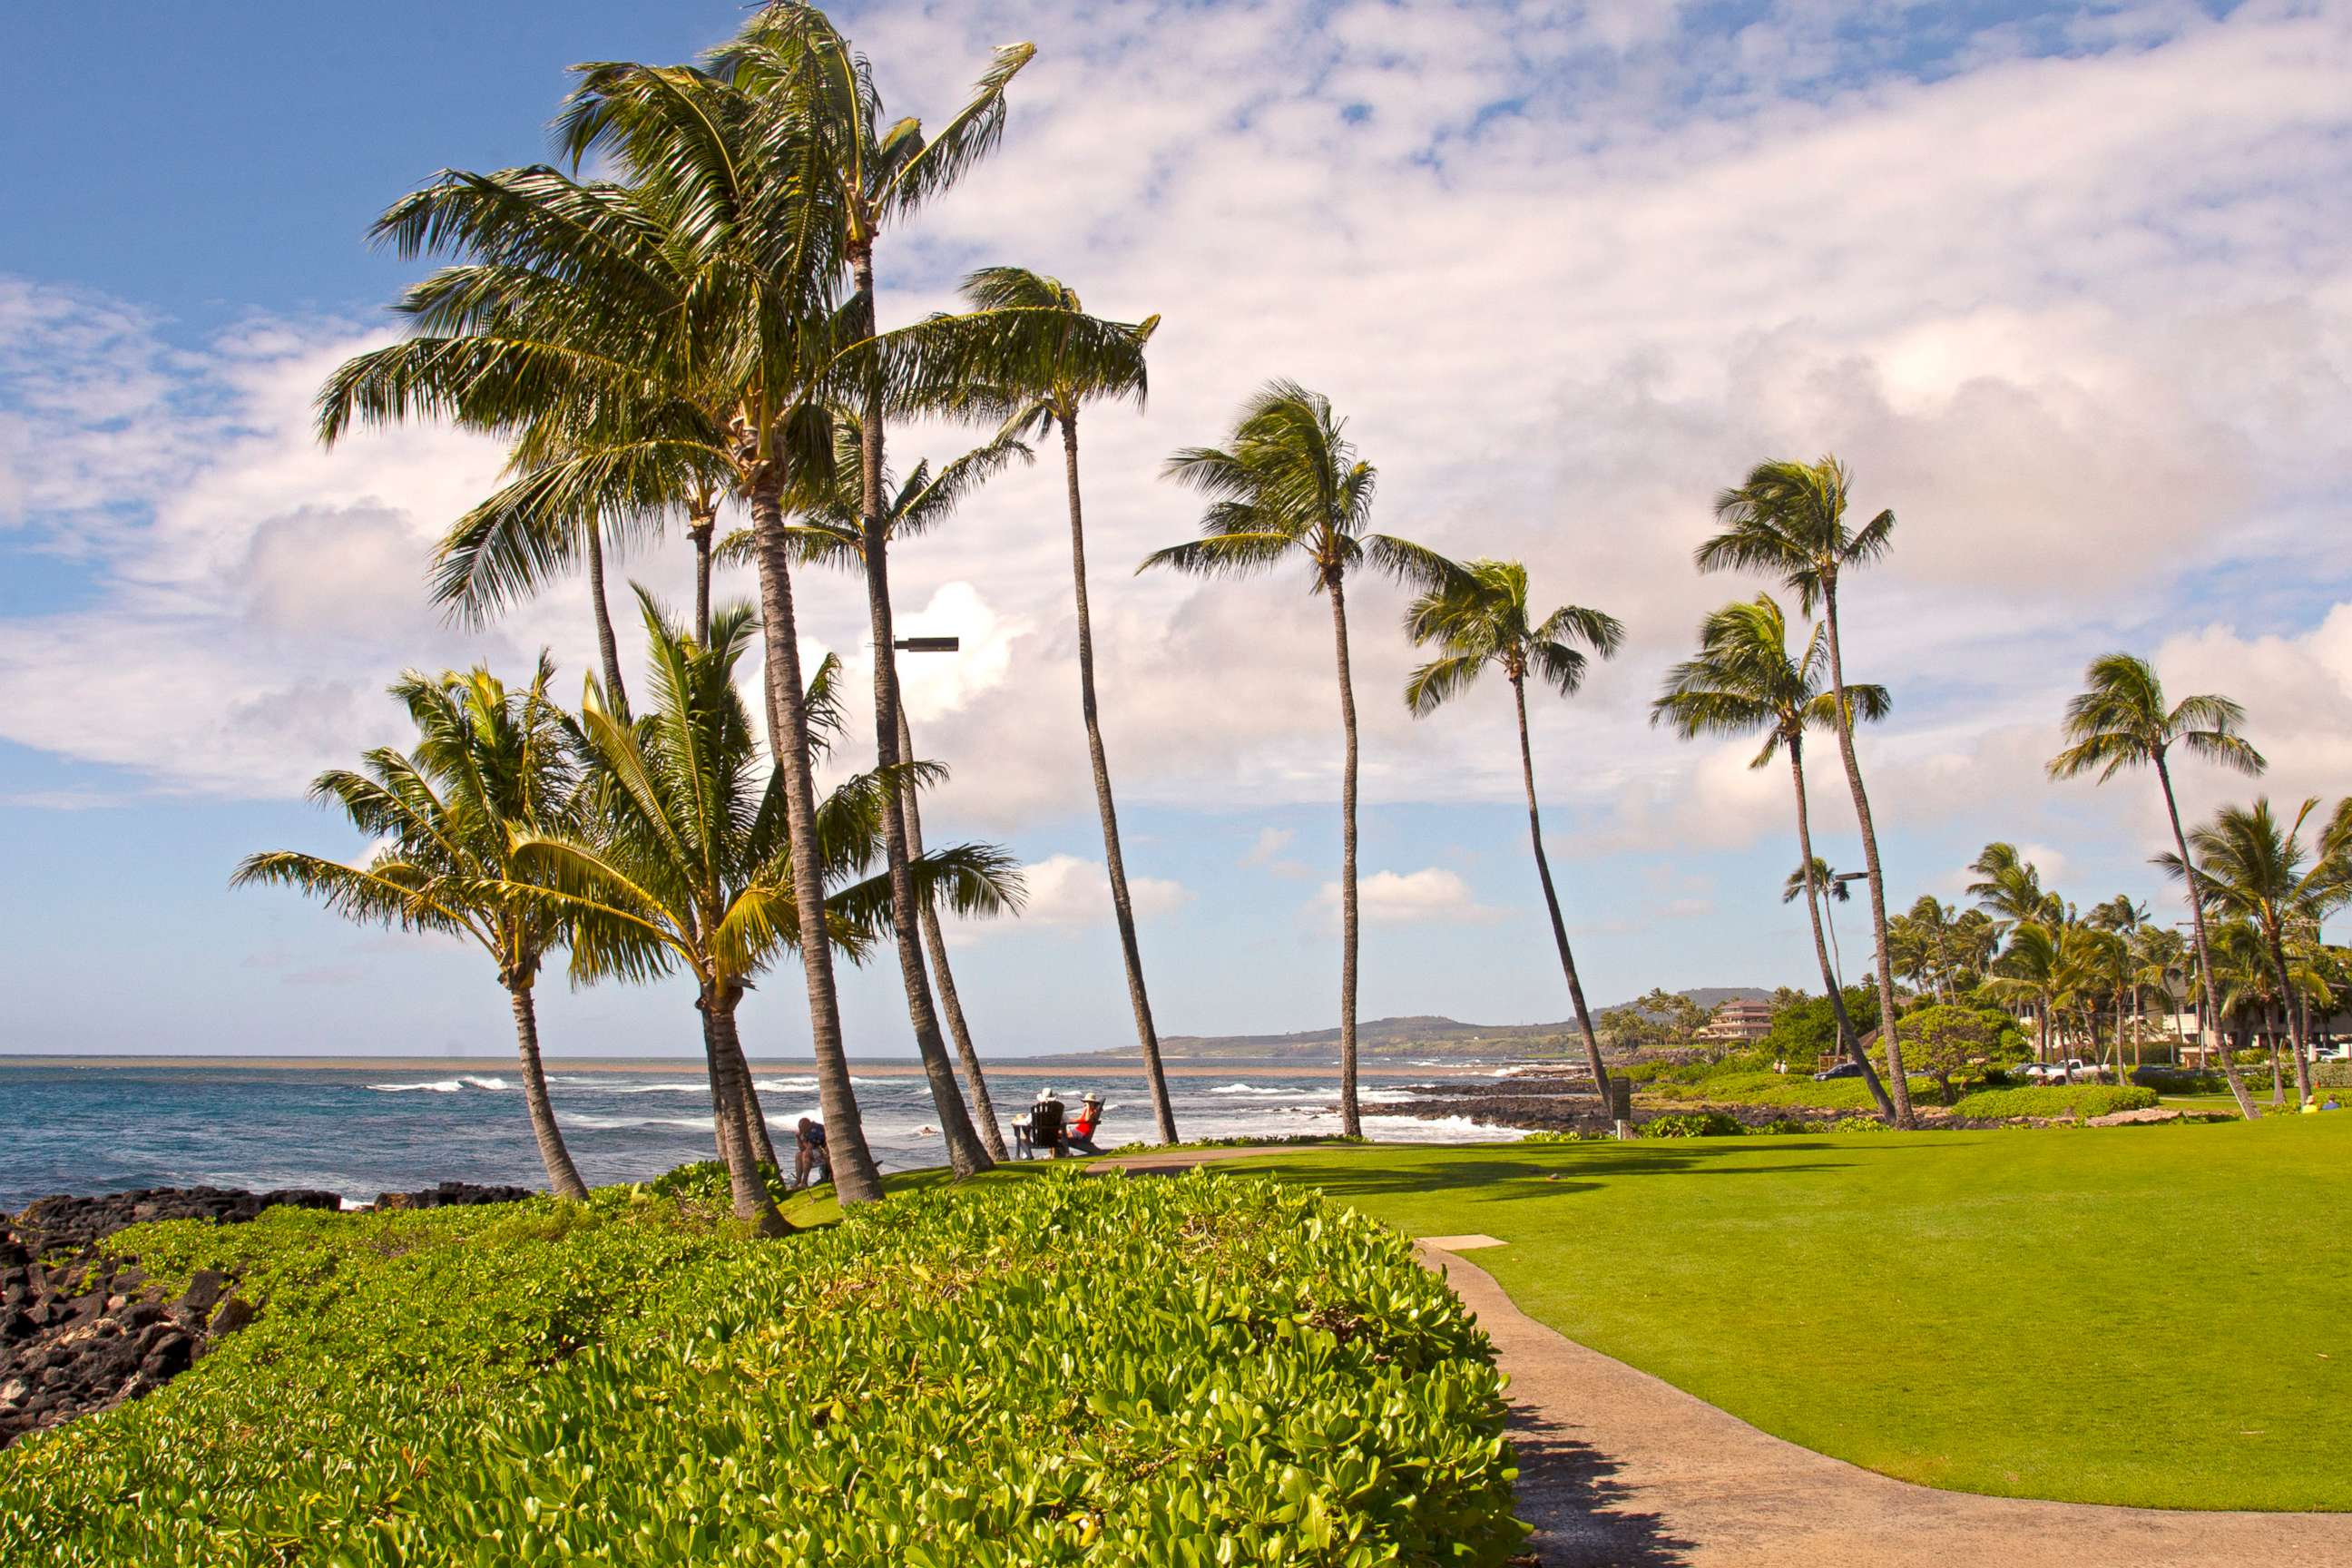 PHOTO: A walkway leads to the beach in Kauai, Hawaii.